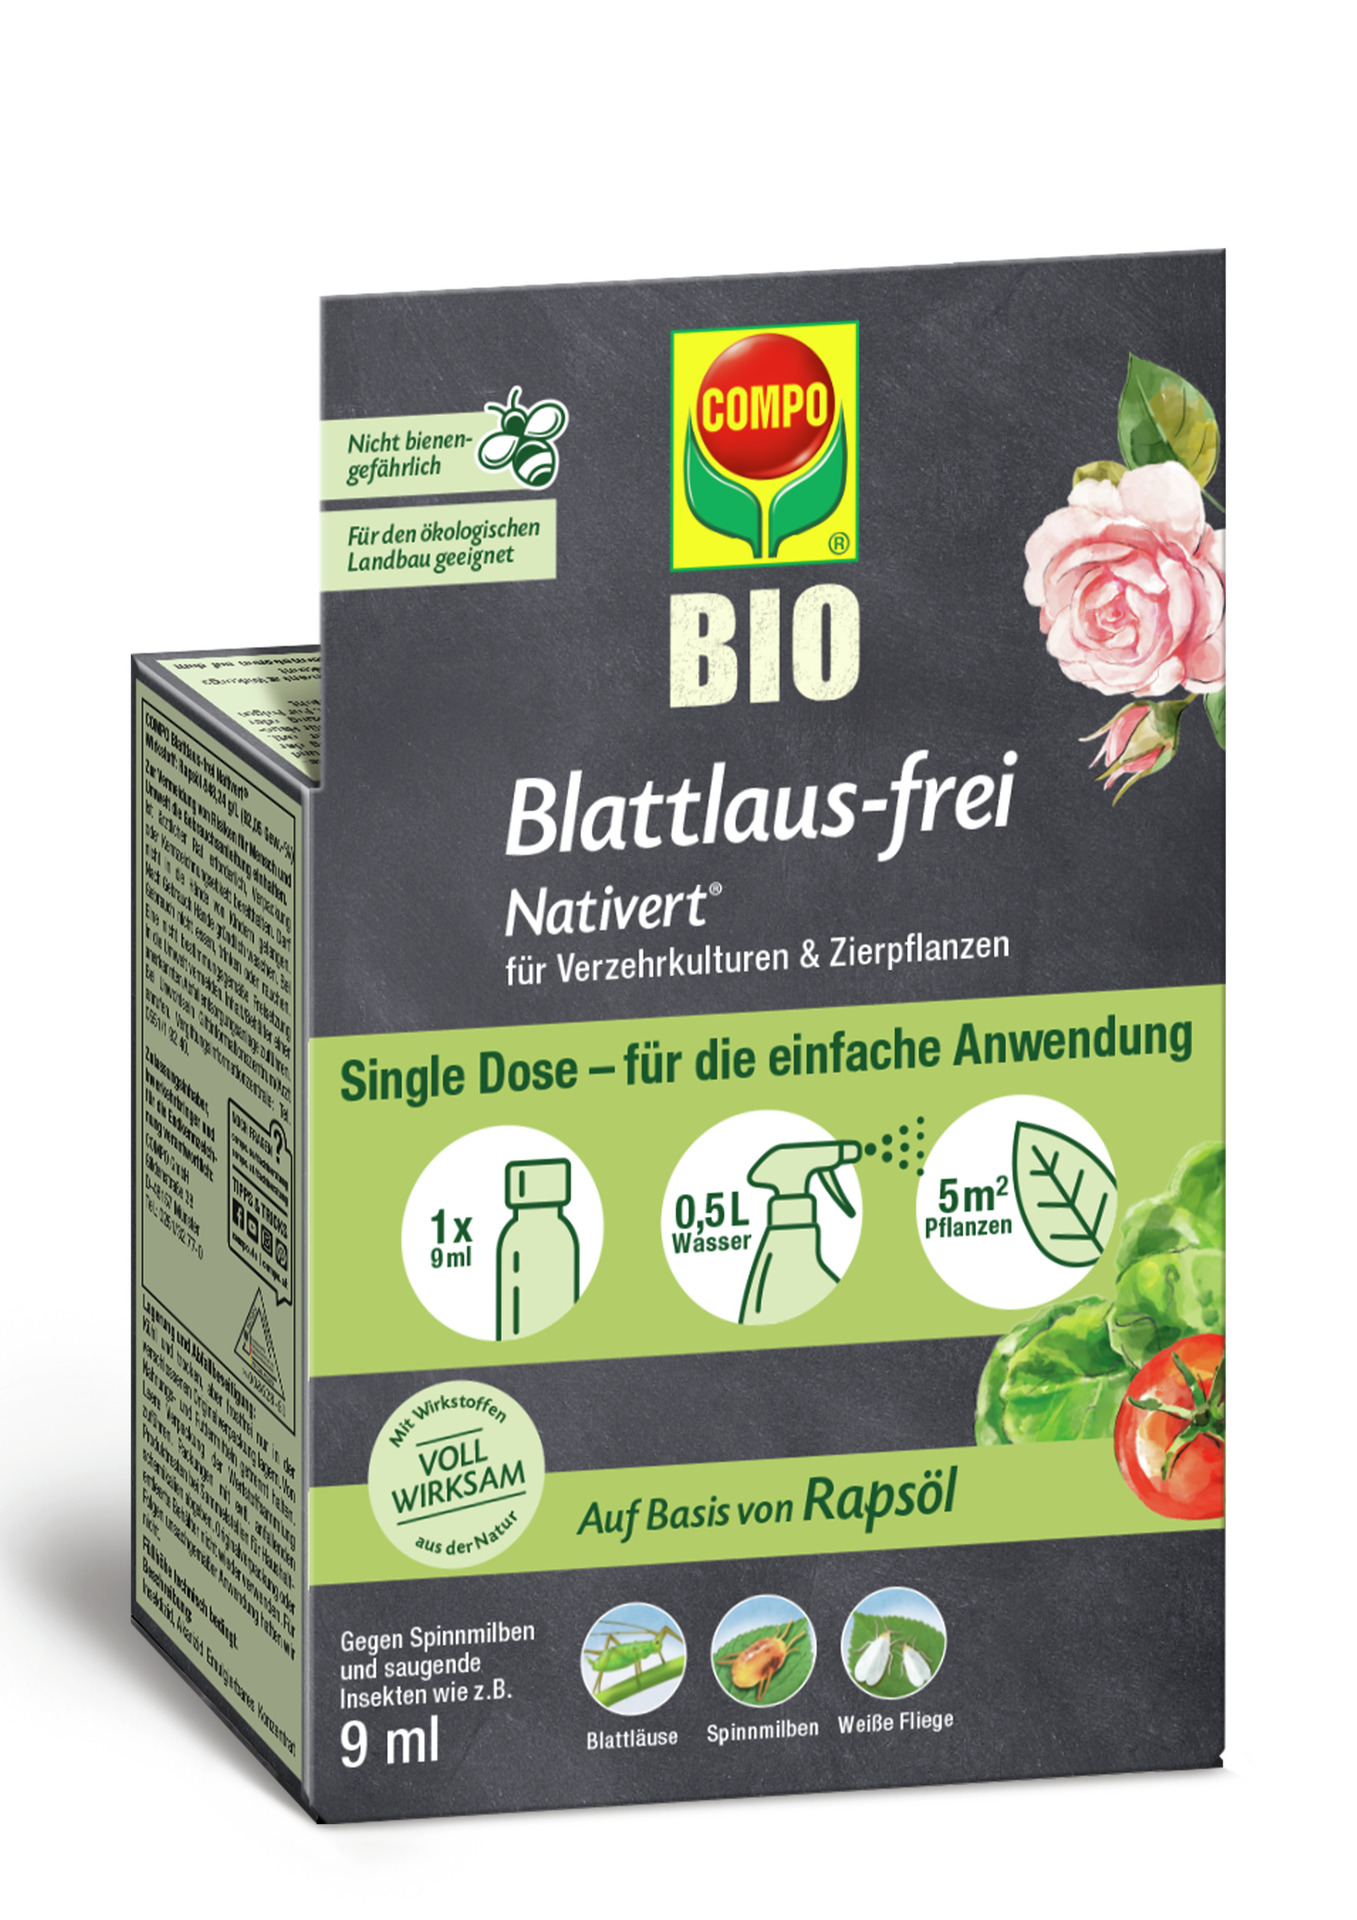 Compo Blattlaus-frei Nativert®